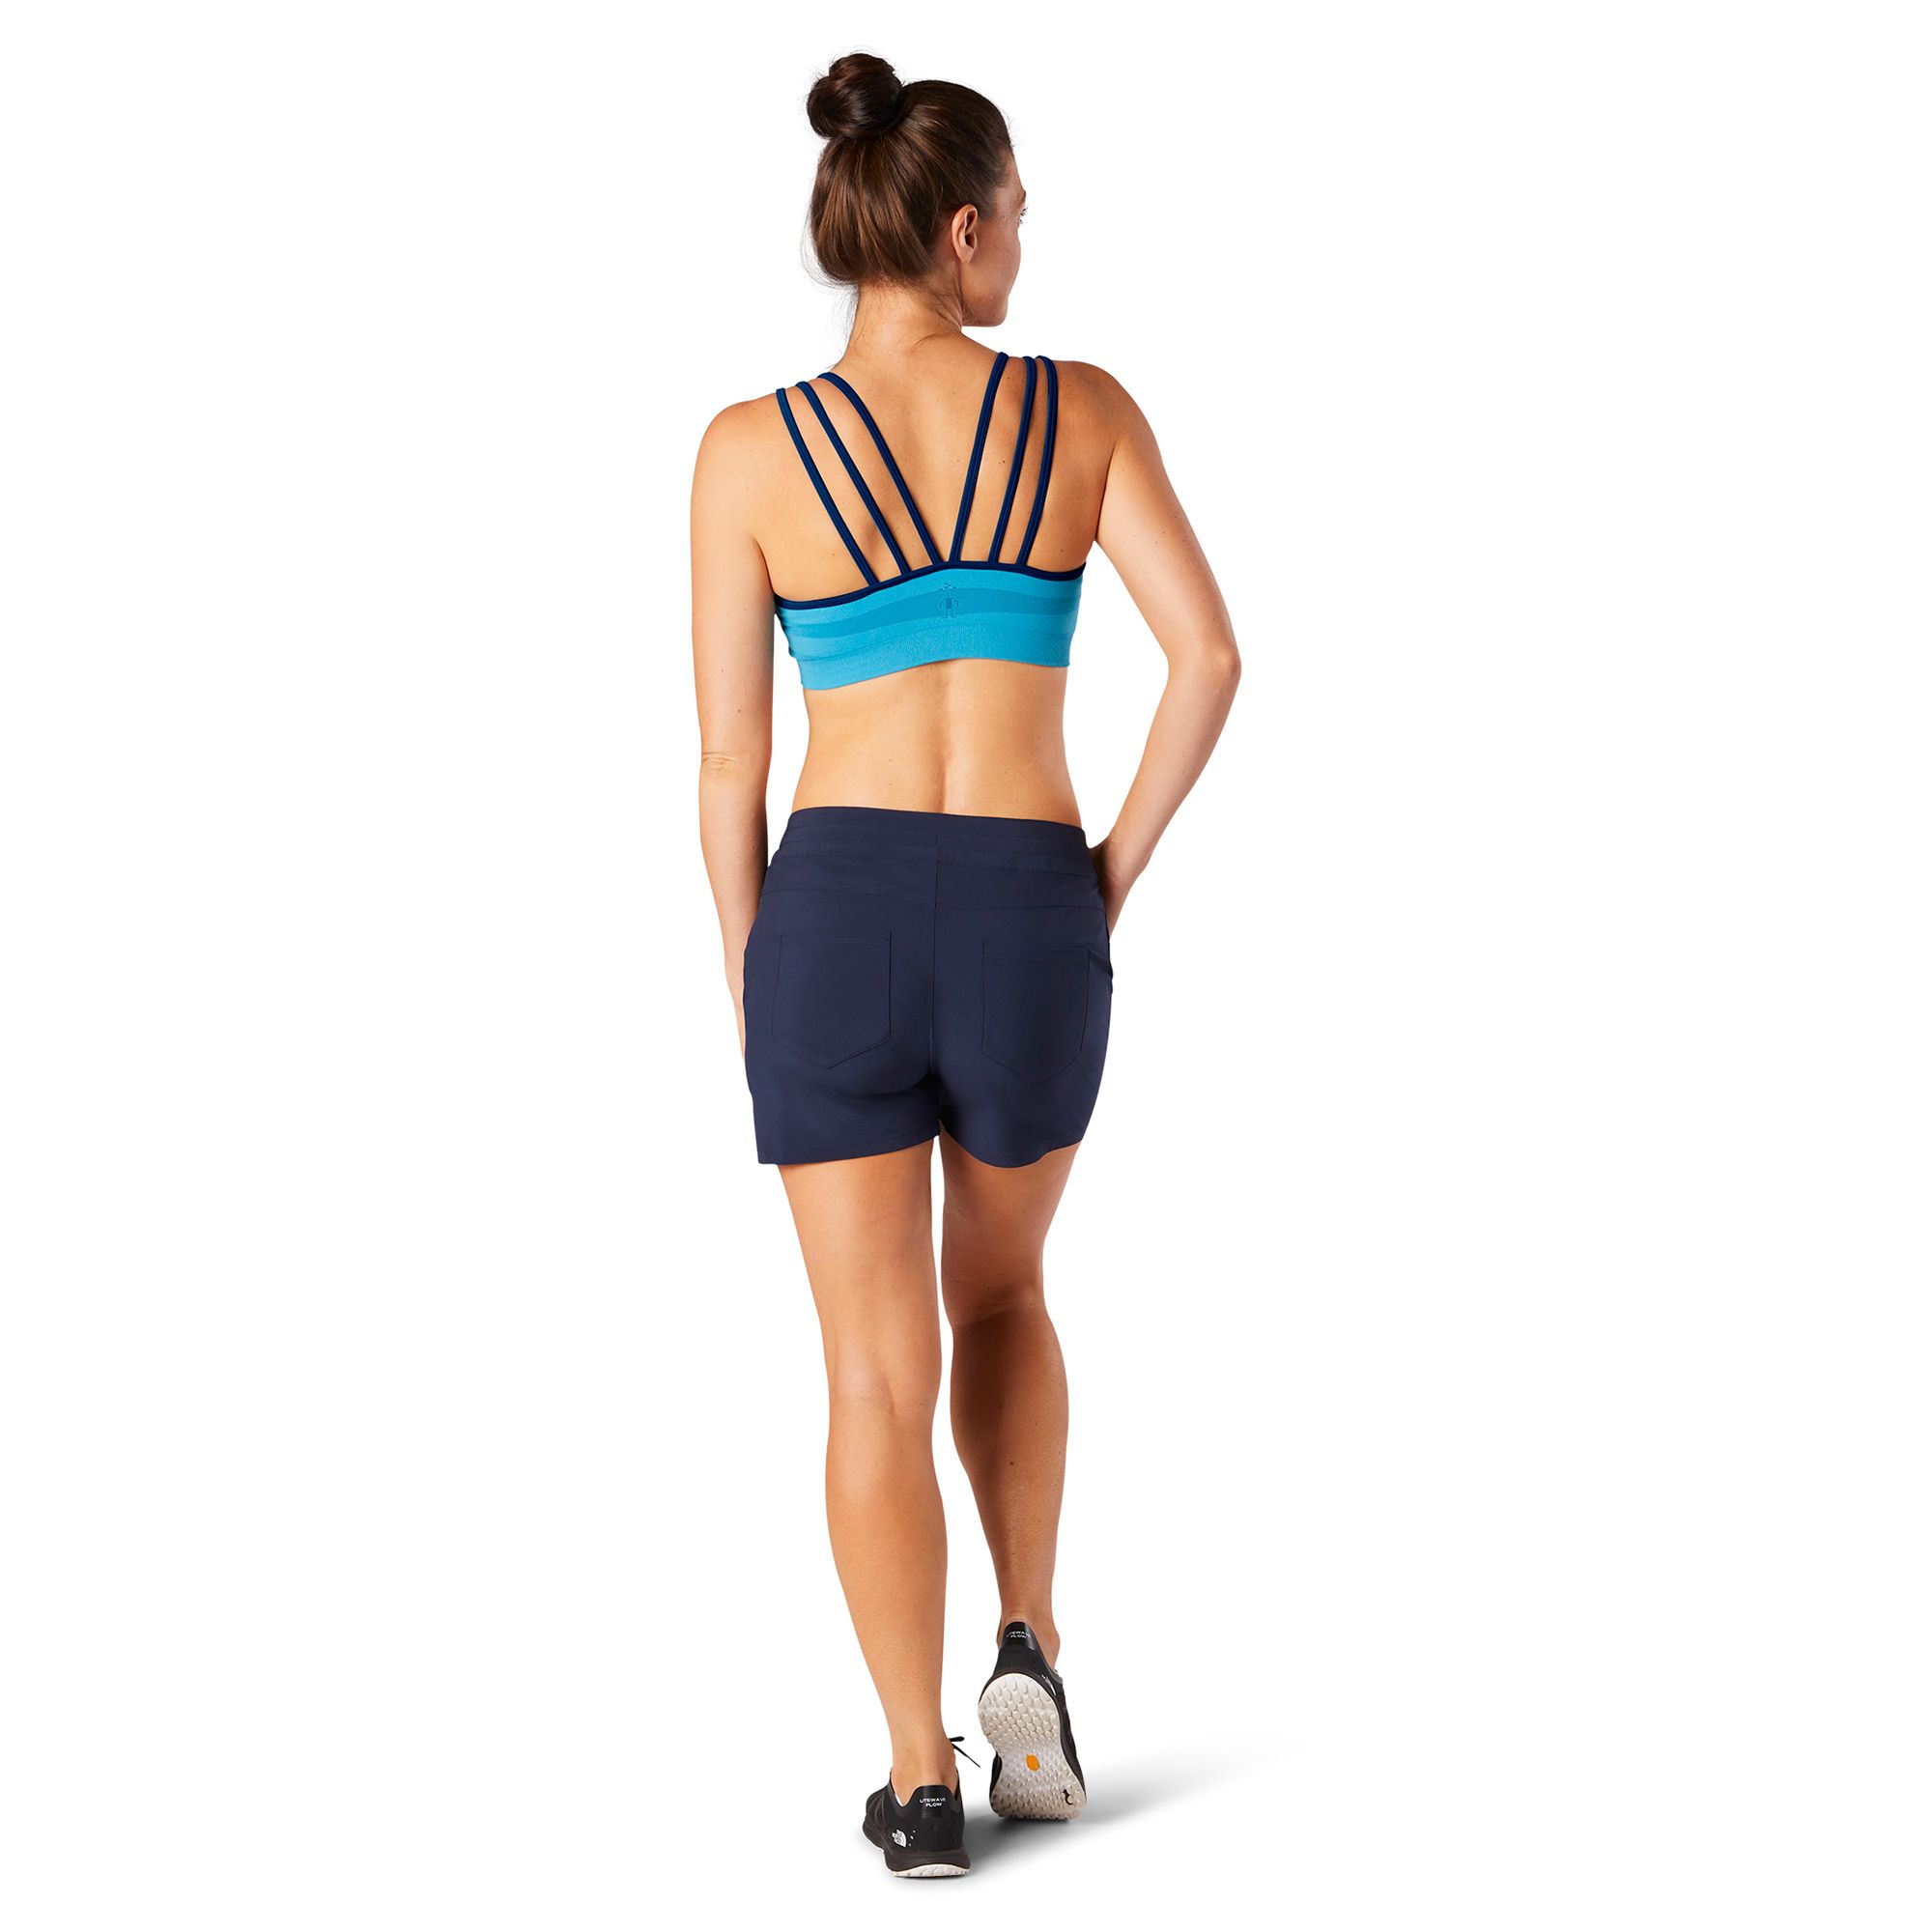 Lavento Women's Strappy Sports Bra Size M - $10 (60% Off Retail